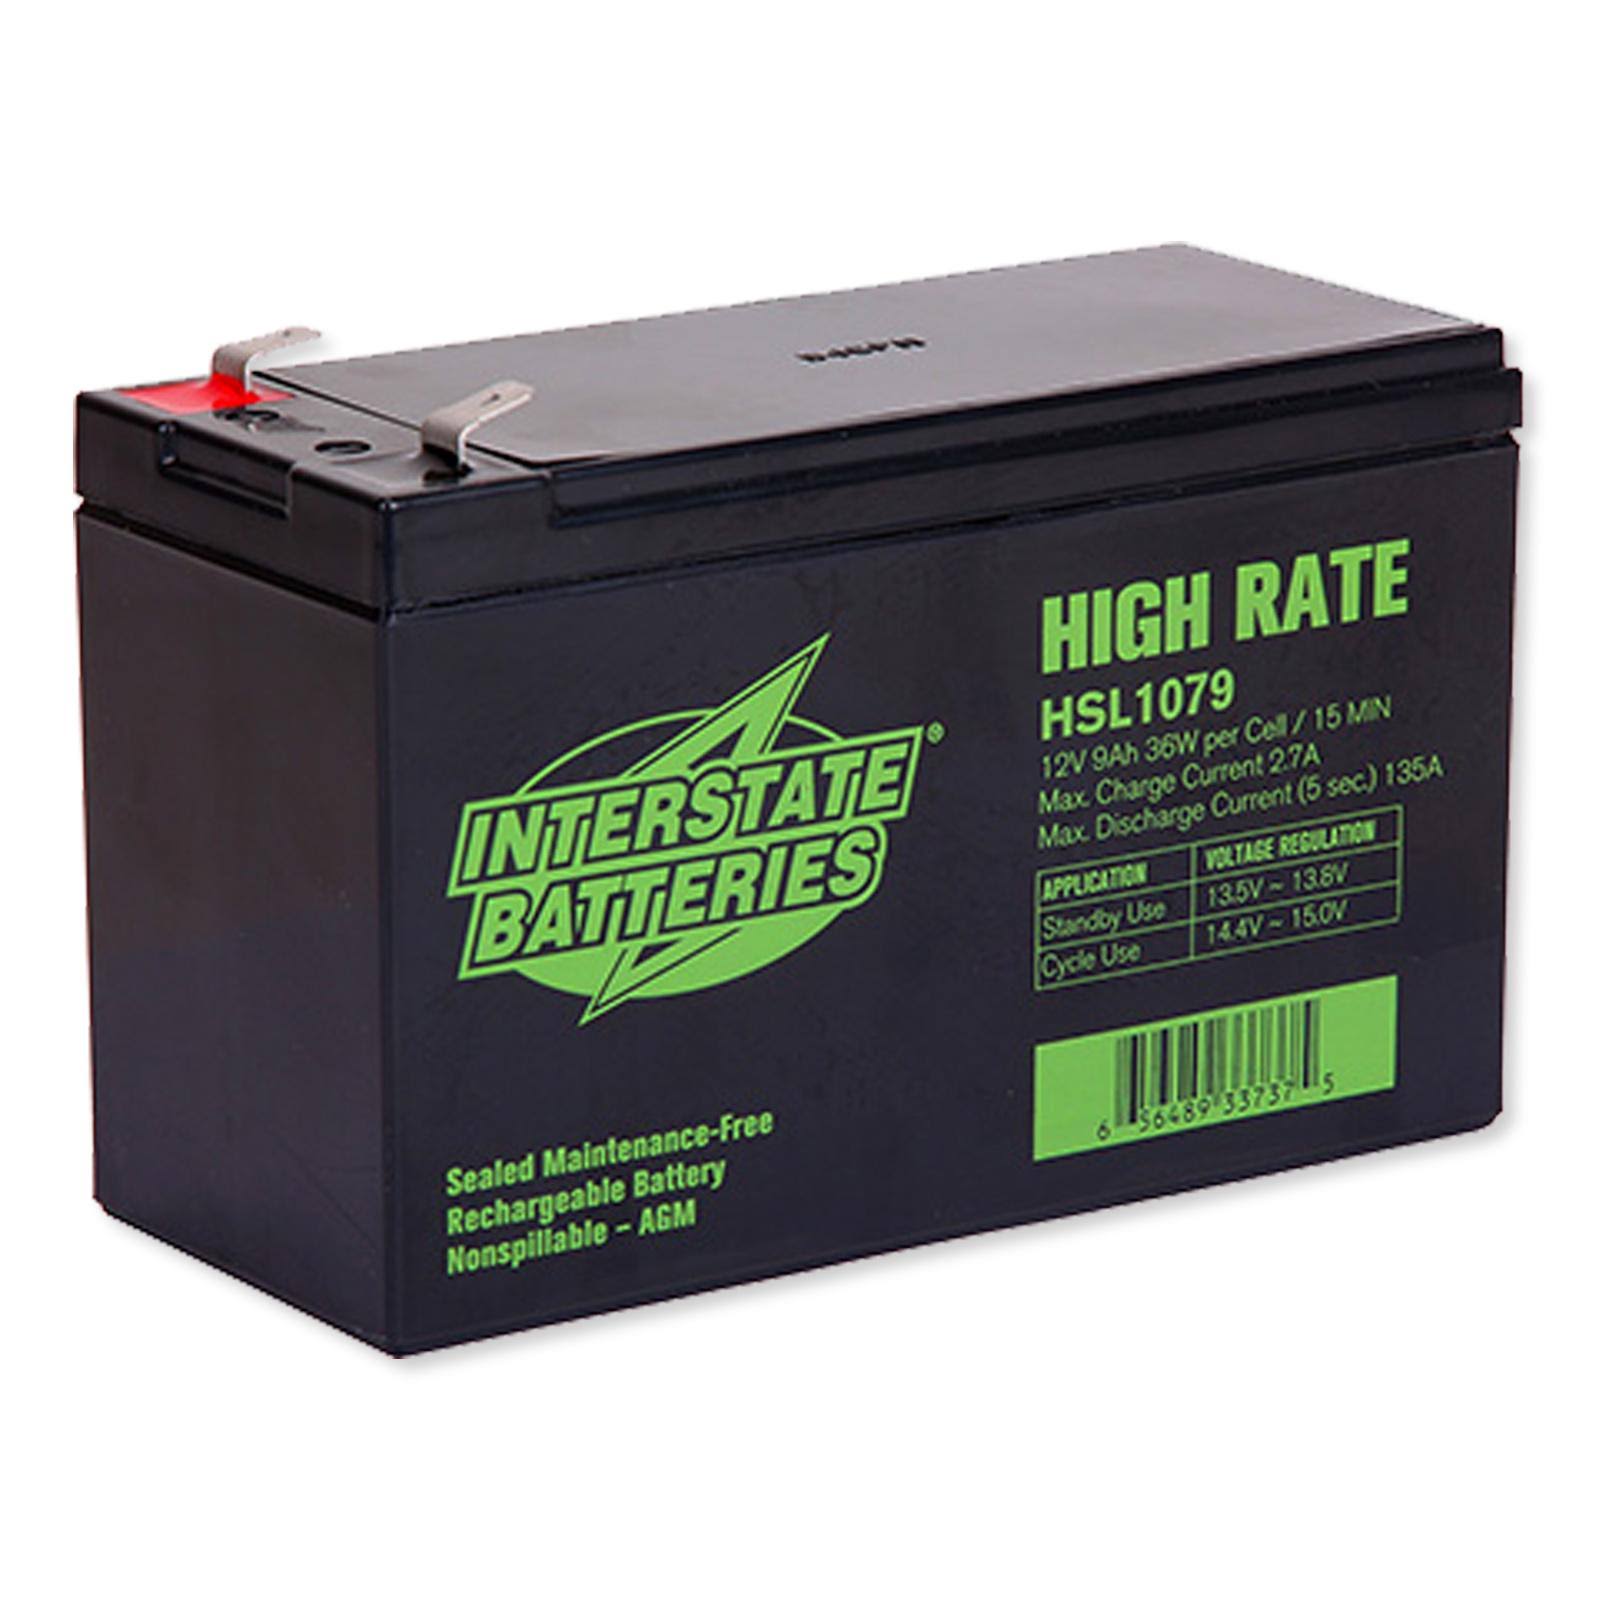 Interstate Batteries High Rate Battery, 12V 9Ah